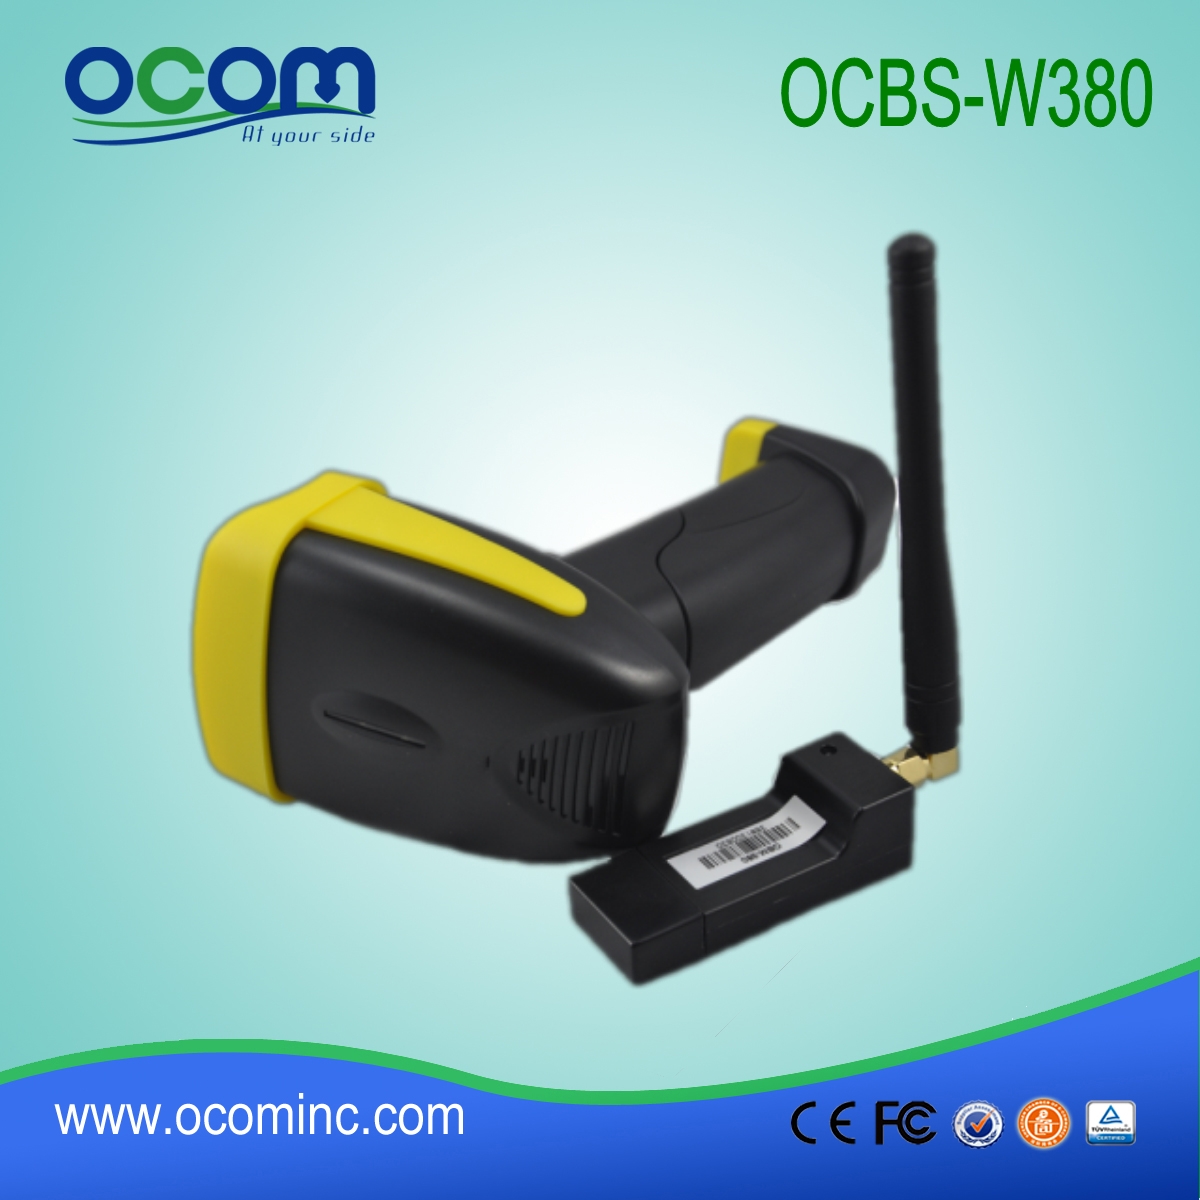 OCBS-W380: long distance  handheld 433mhz wireless barcode scanner